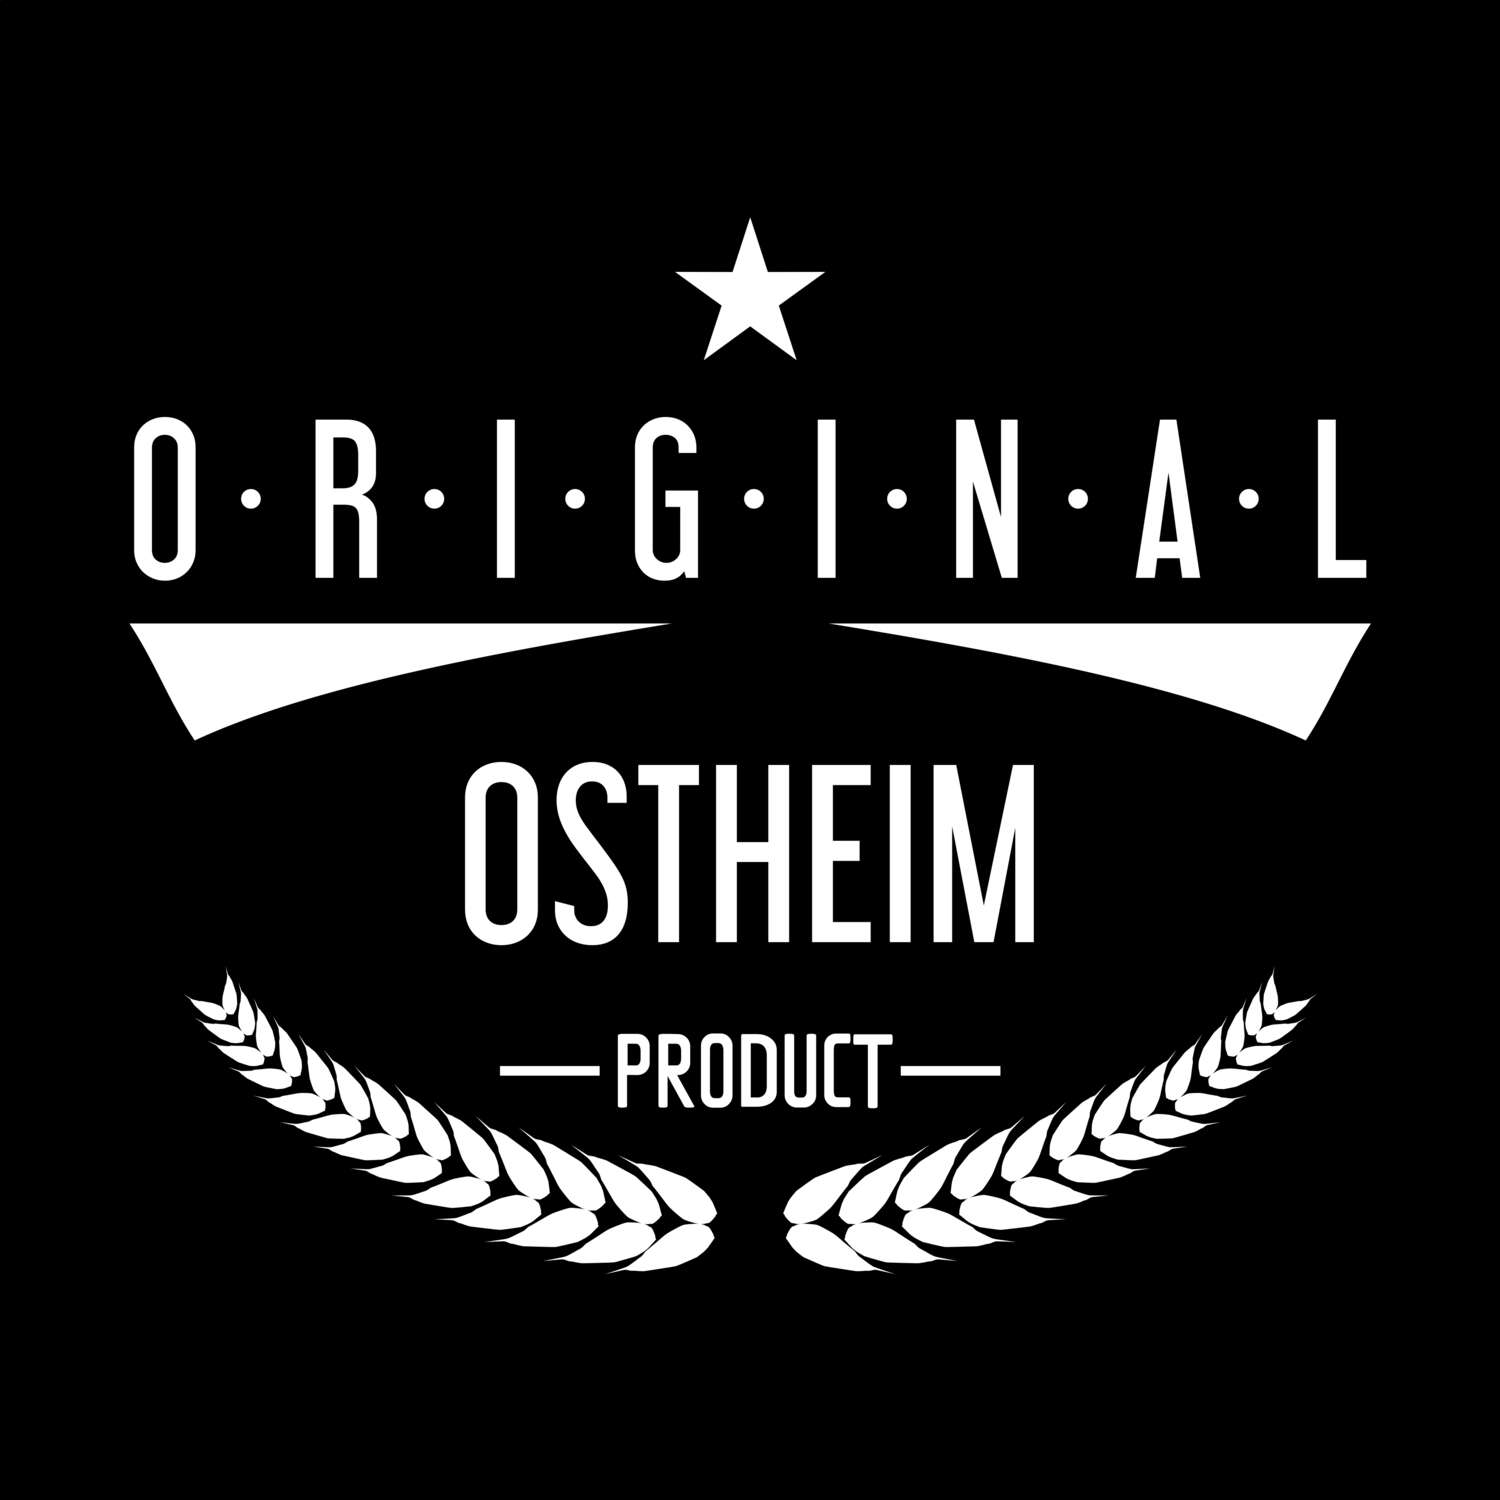 Ostheim T-Shirt »Original Product«